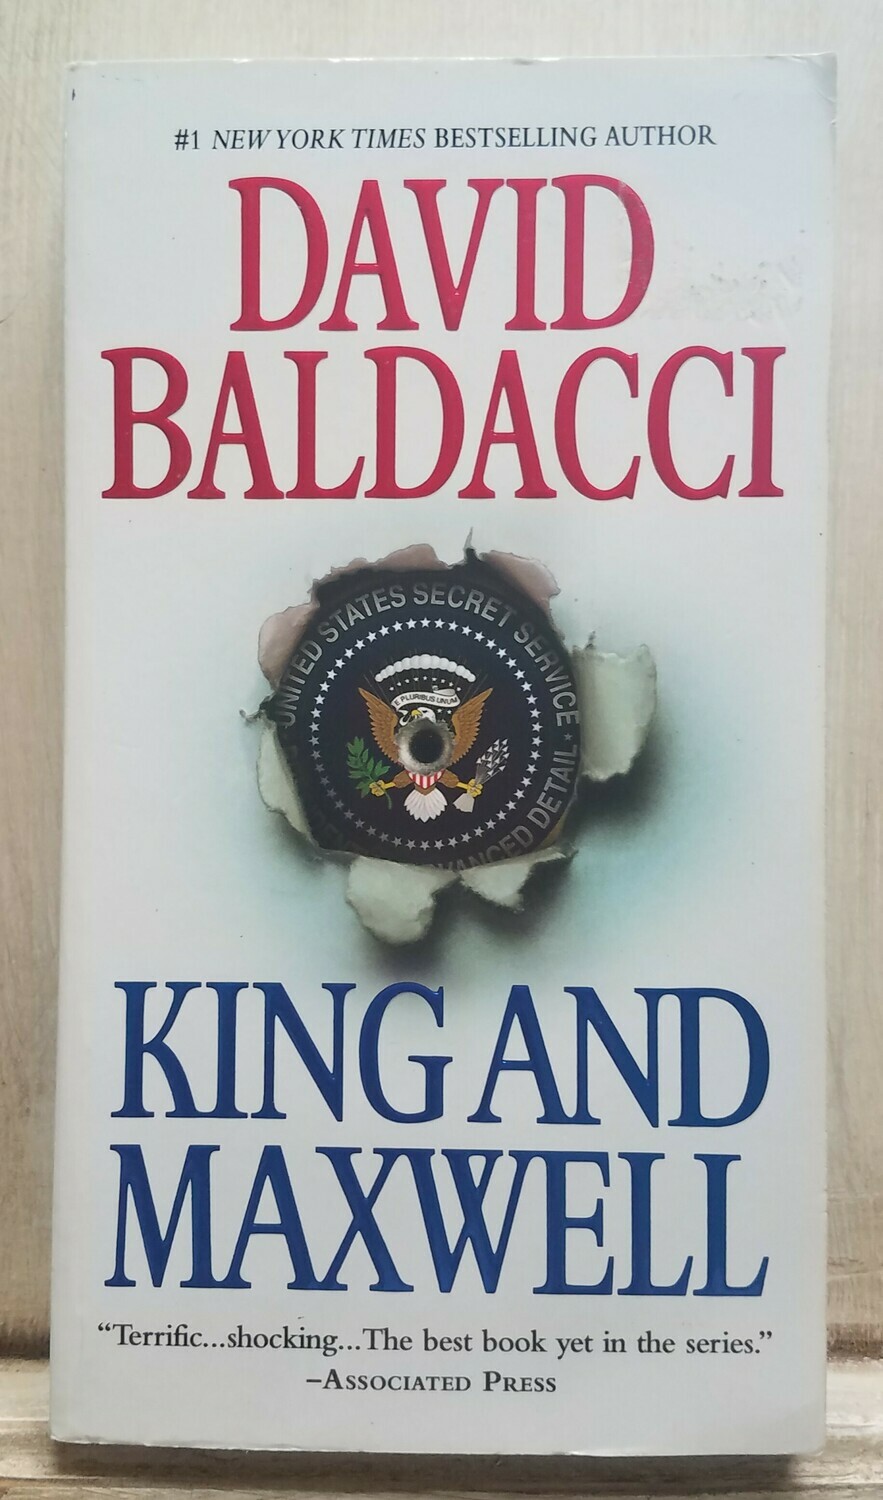 King and Maxwell by David Baldacci